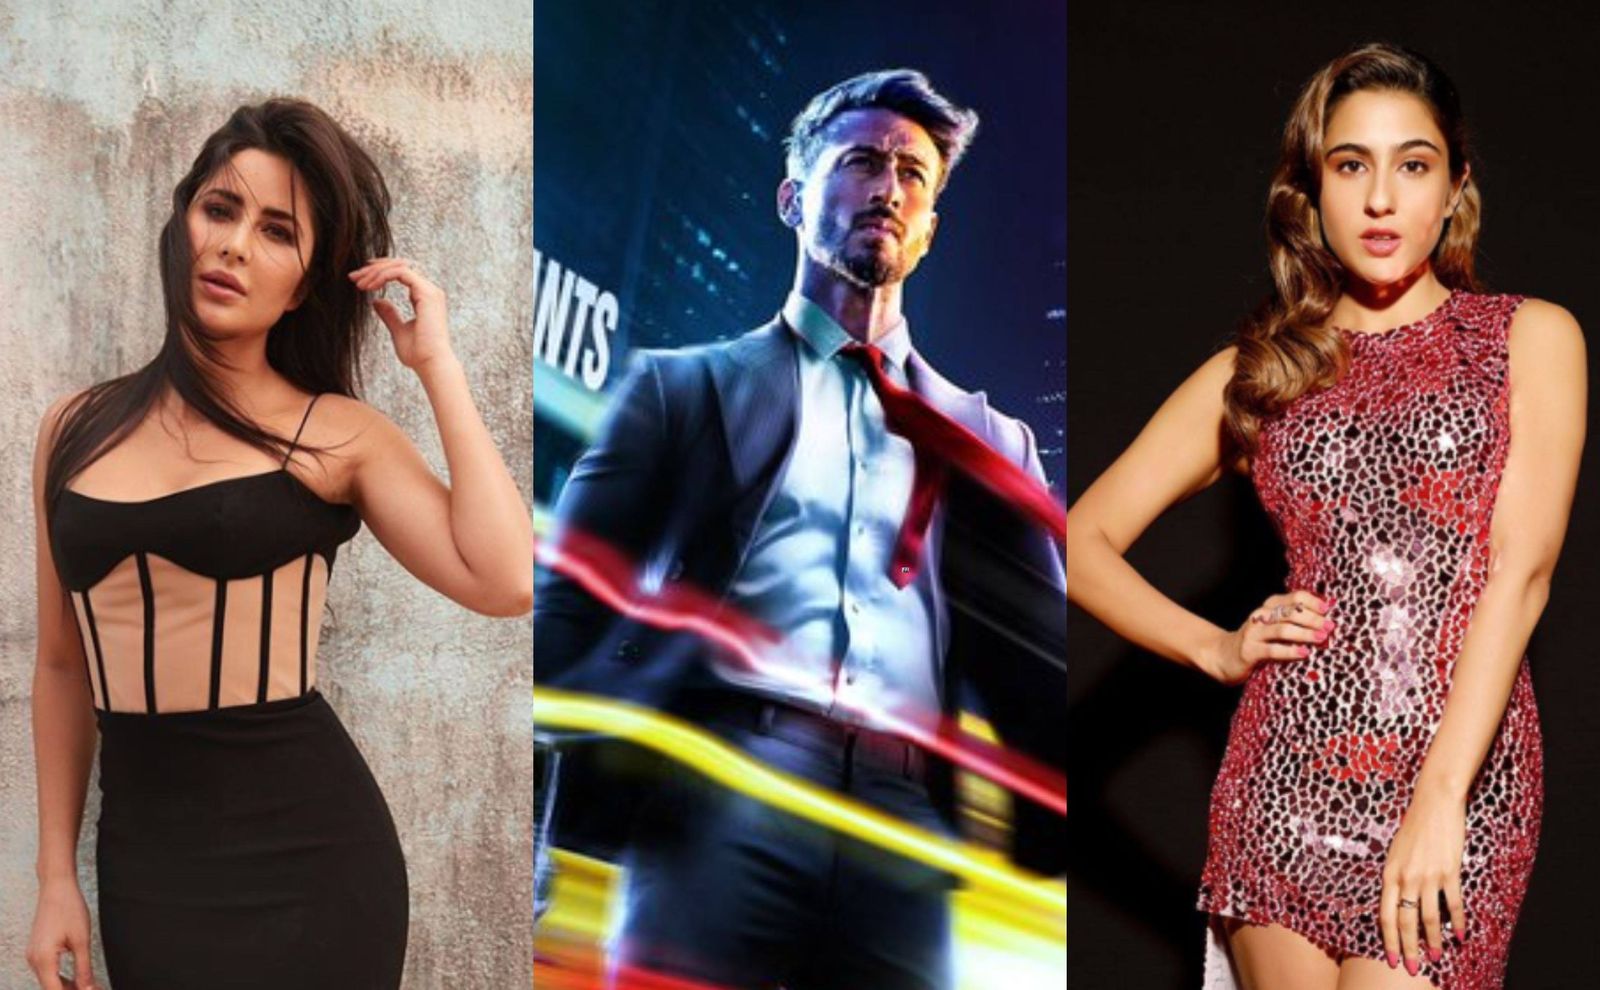 Heropanti 2: Katrina Kaif Or Sara Ali Khan To Star Opposite Tiger Shroff In The Action Entertainer?